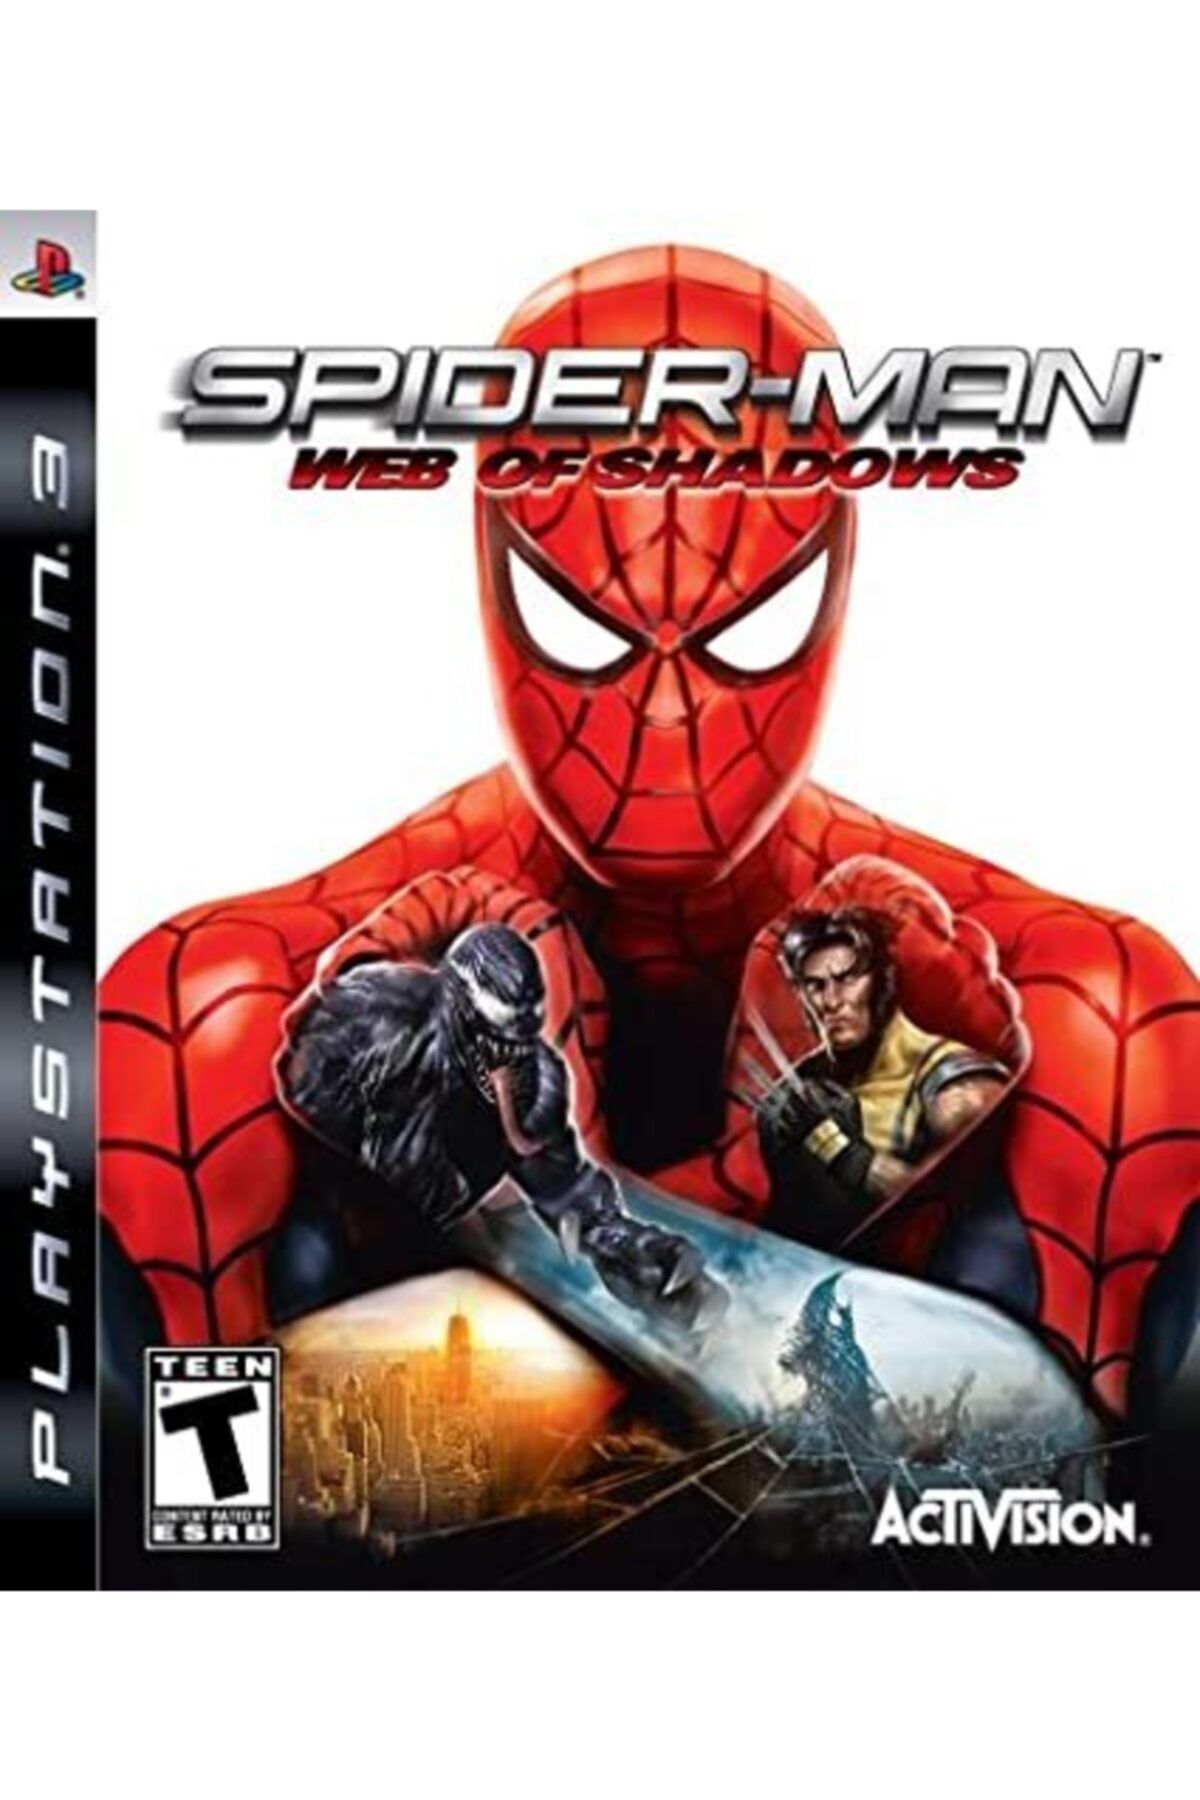 Activision Spiderman Web Of Shadows Ps3 Spider-man